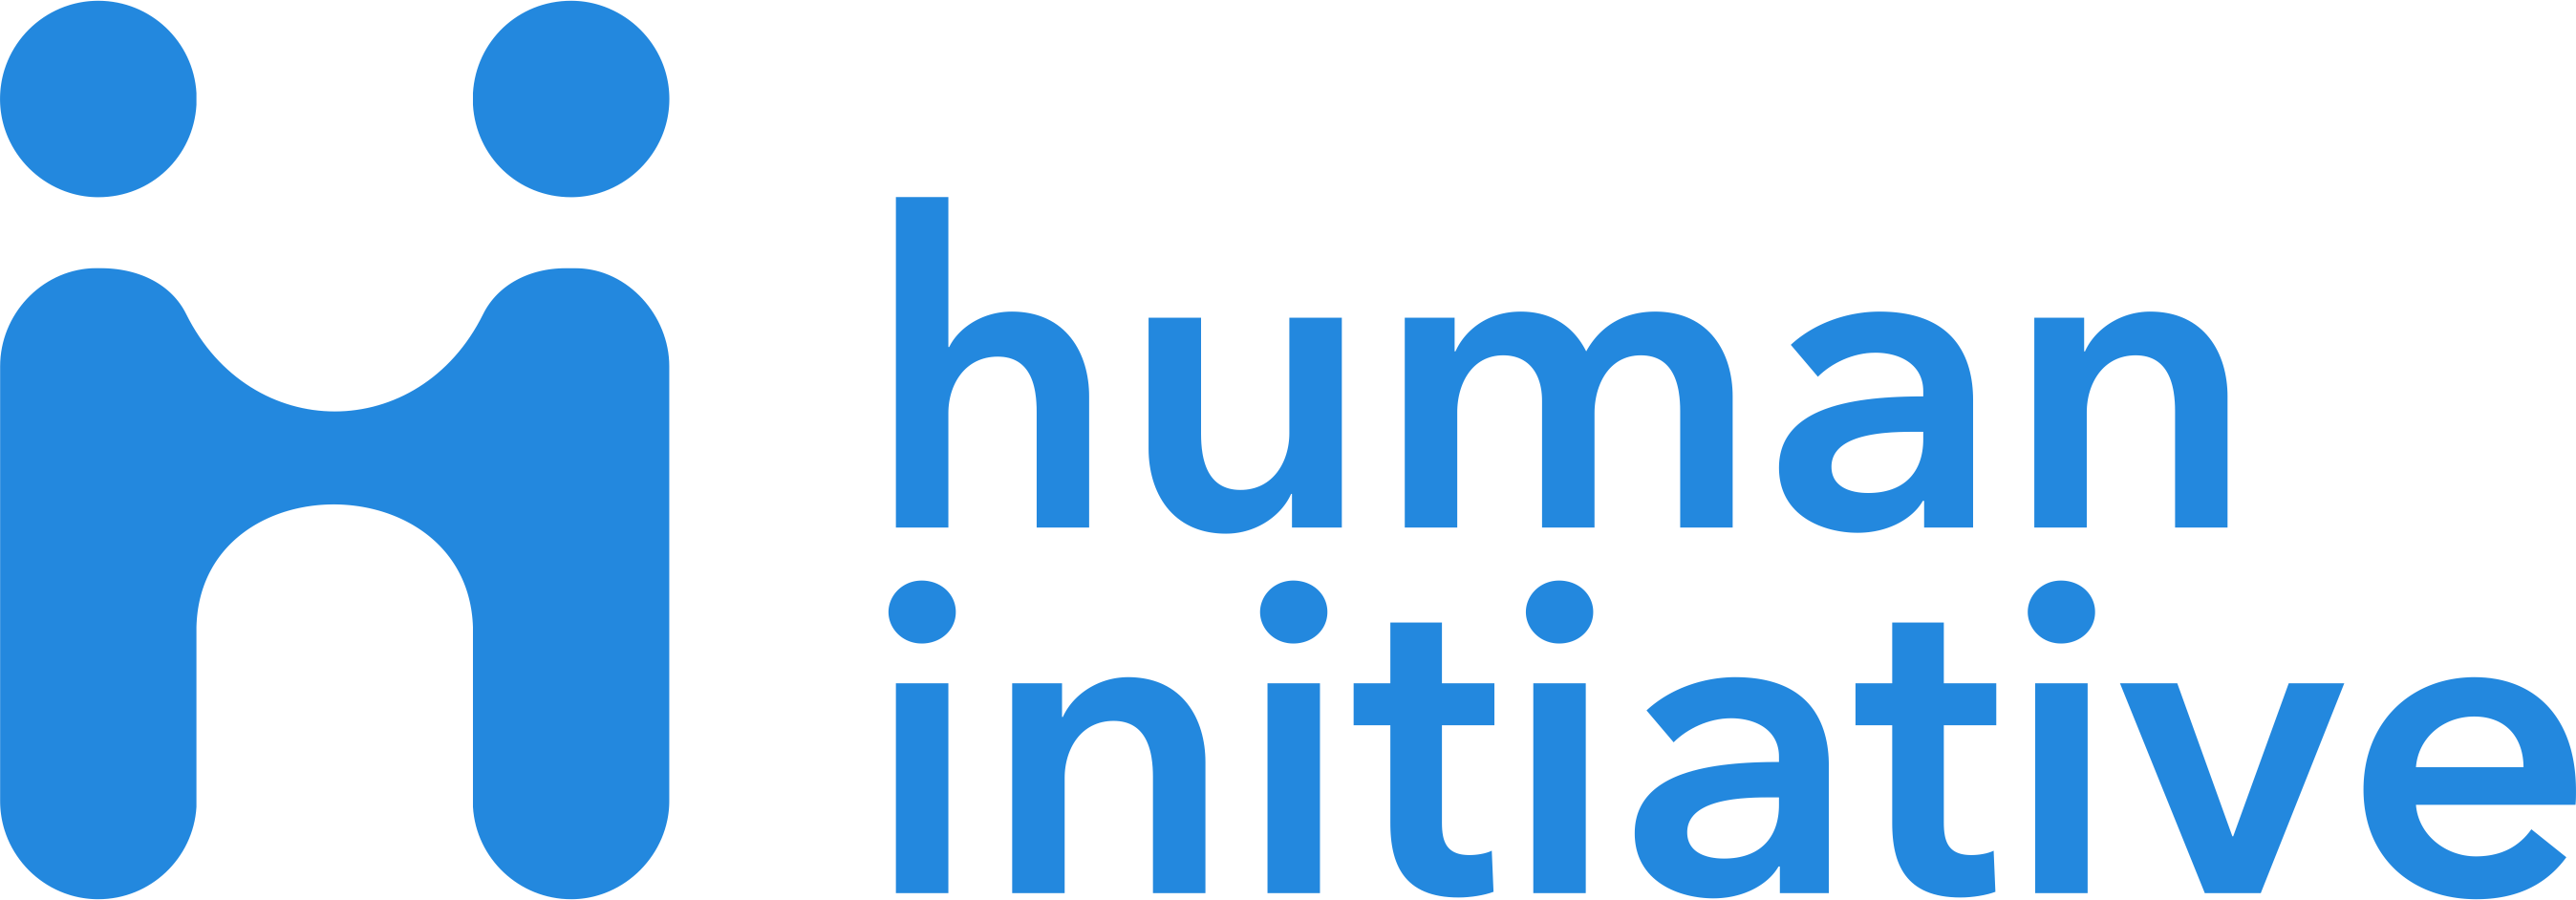 Human Initiative